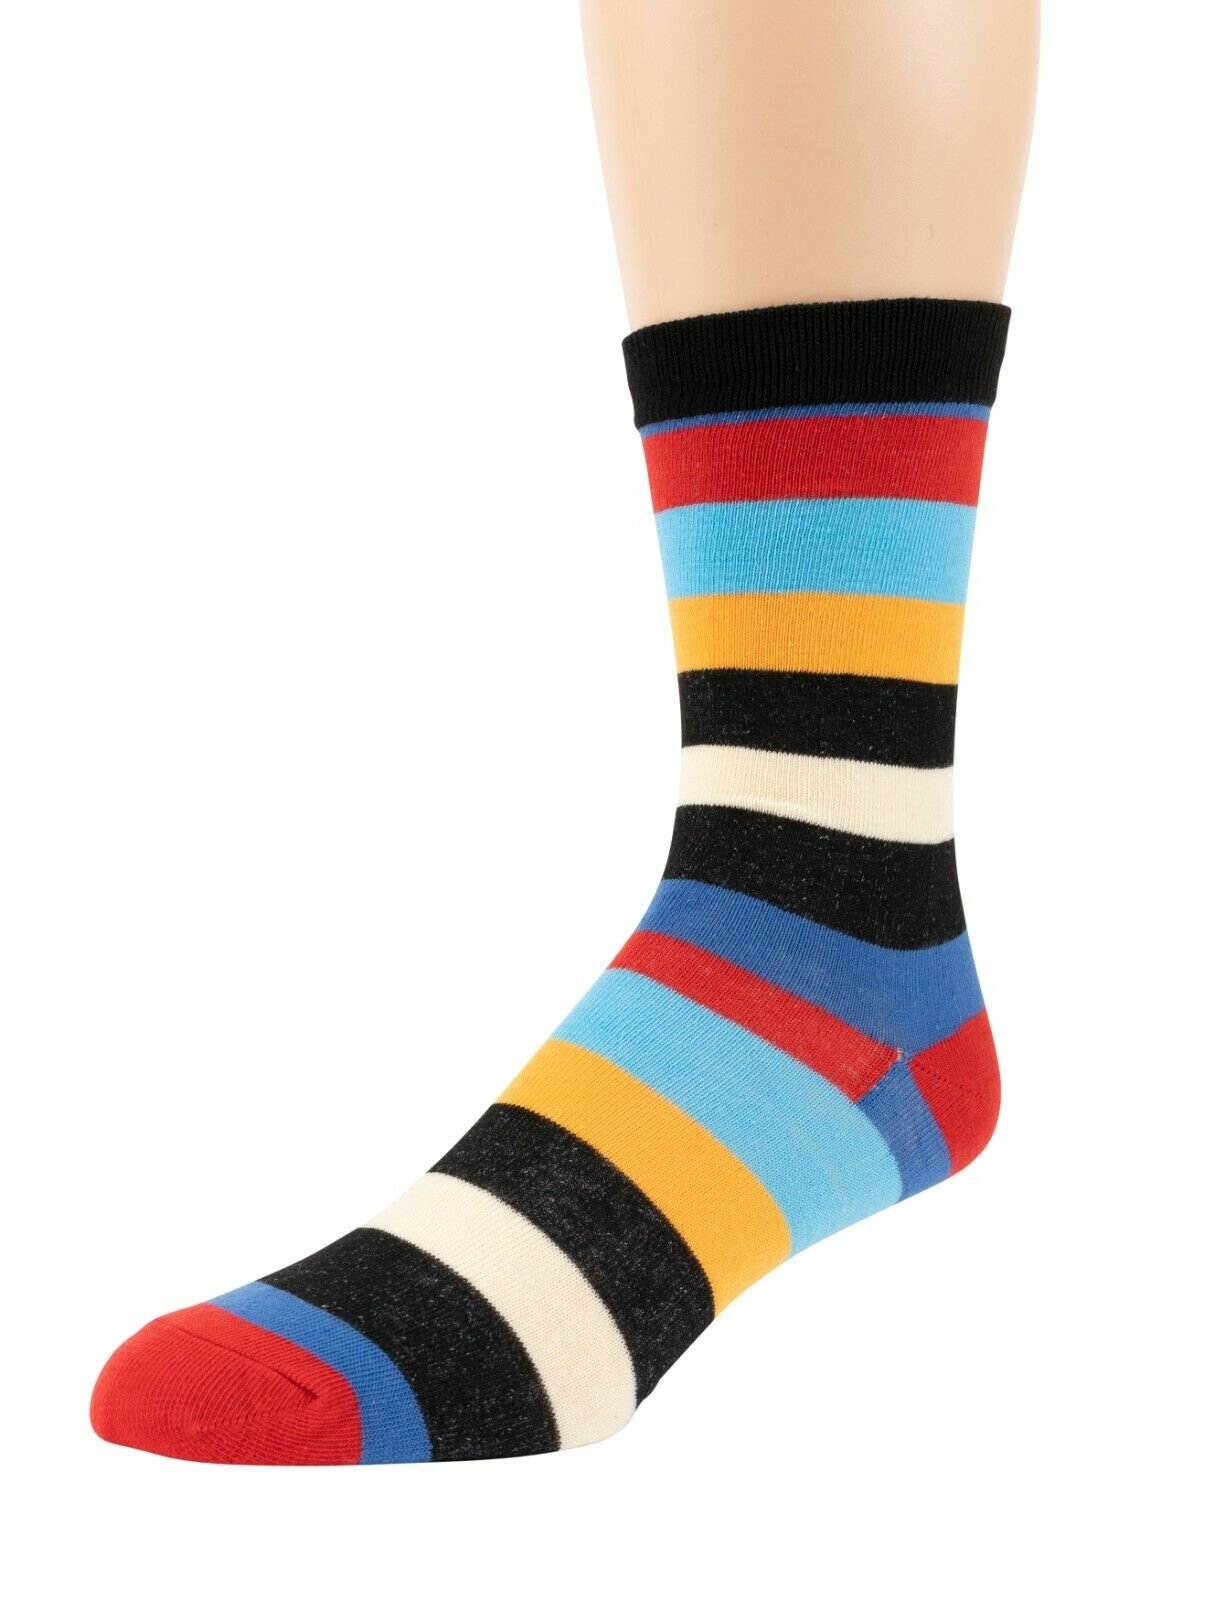 Men's Dress Socks Size 10-13 Colorful Funky Patterned Crew Socks 12 ...